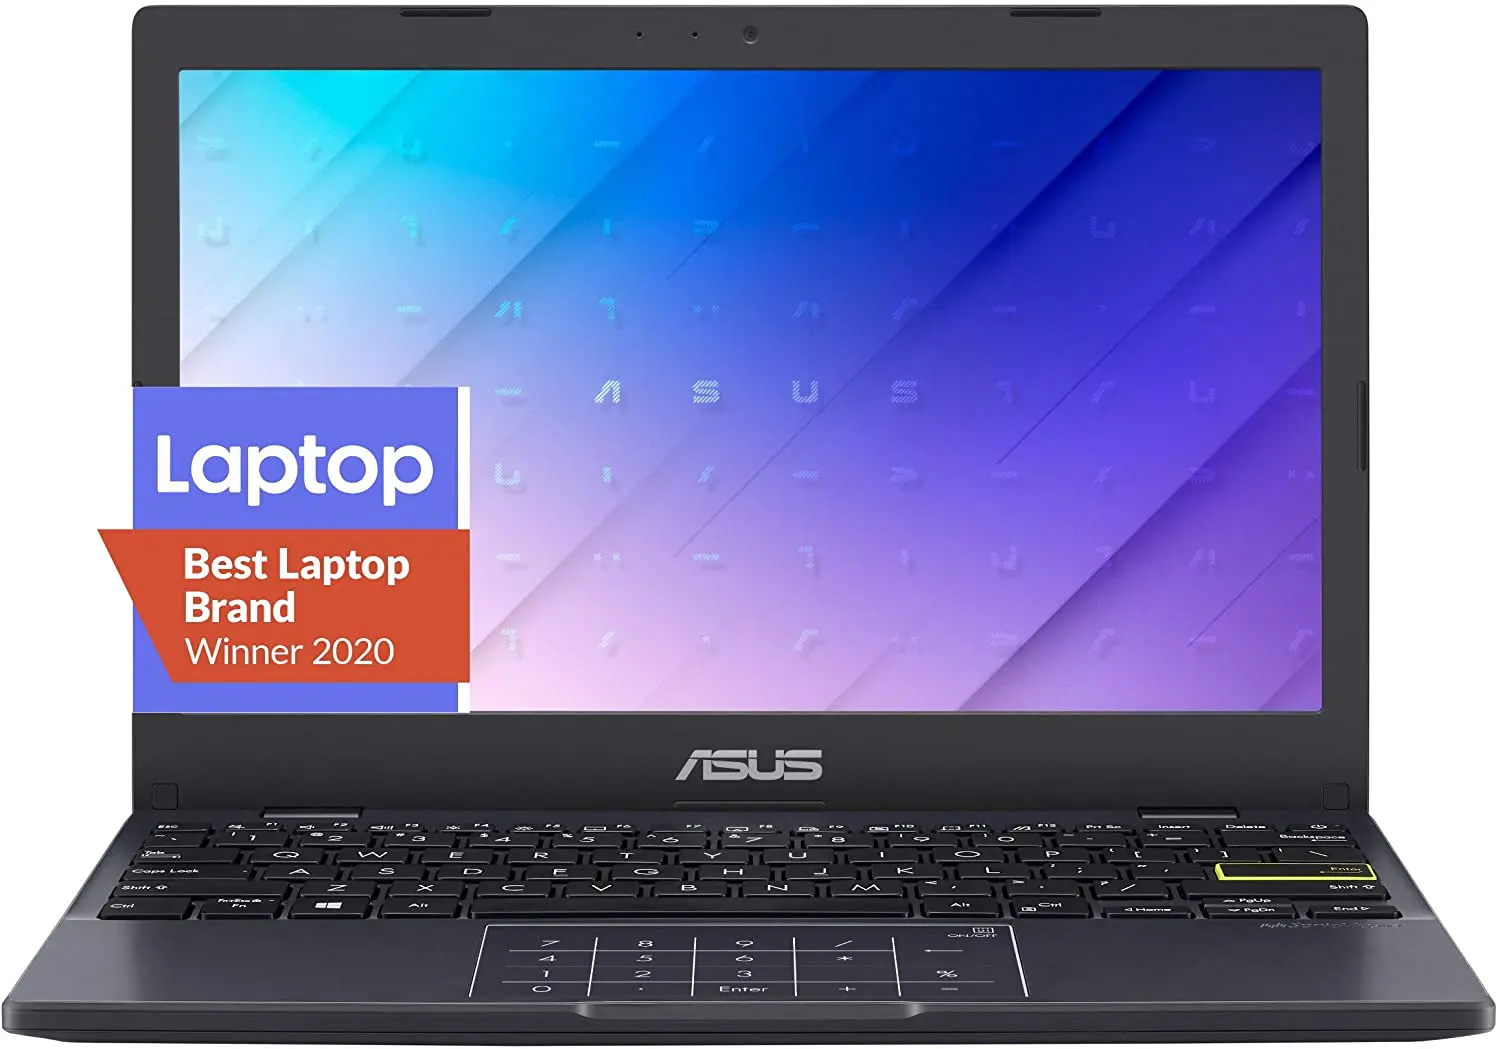 ASUS Laptop L210 Ultra Thin - Good laptop for WordPress development